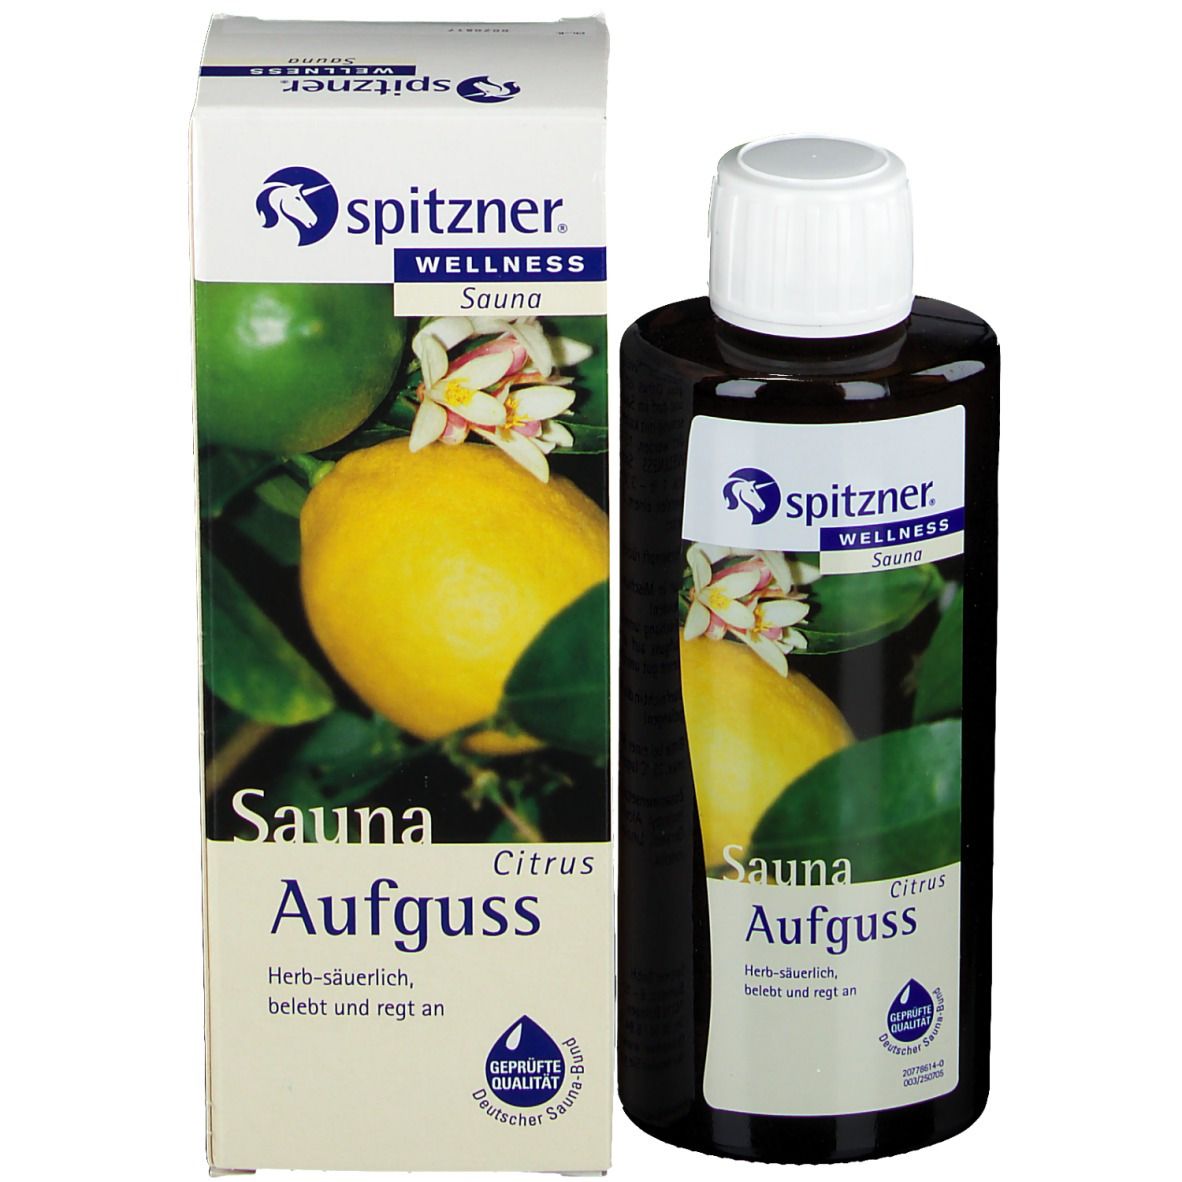 Spitzner® Wellness Saunaaufguss Citrus